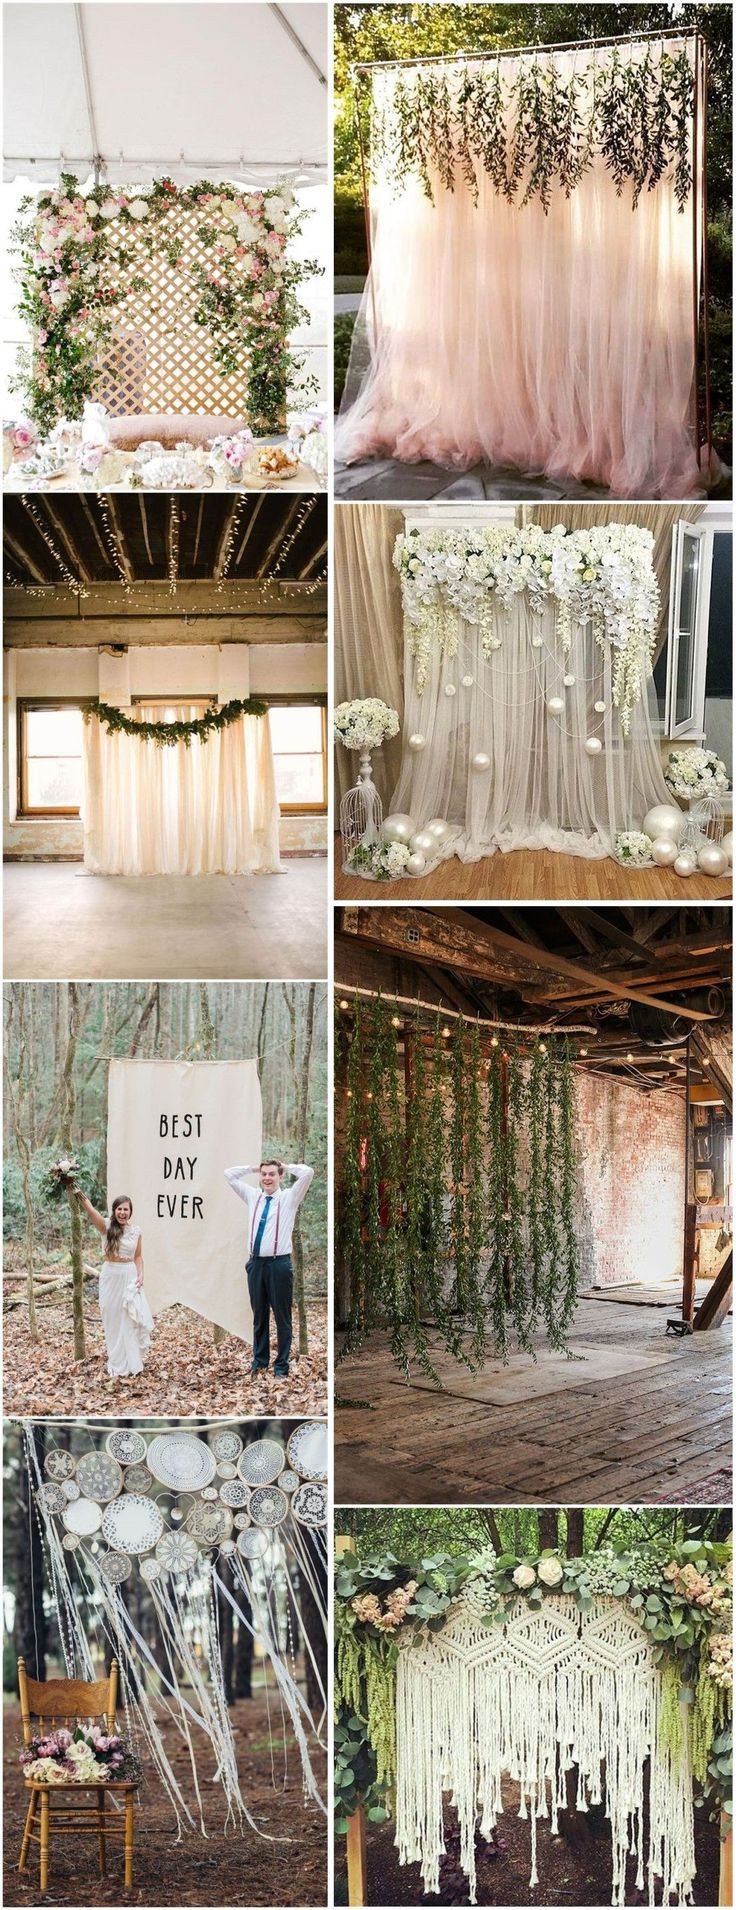 DIY Rustic Weddings
 25 best ideas about Wedding backdrops on Pinterest